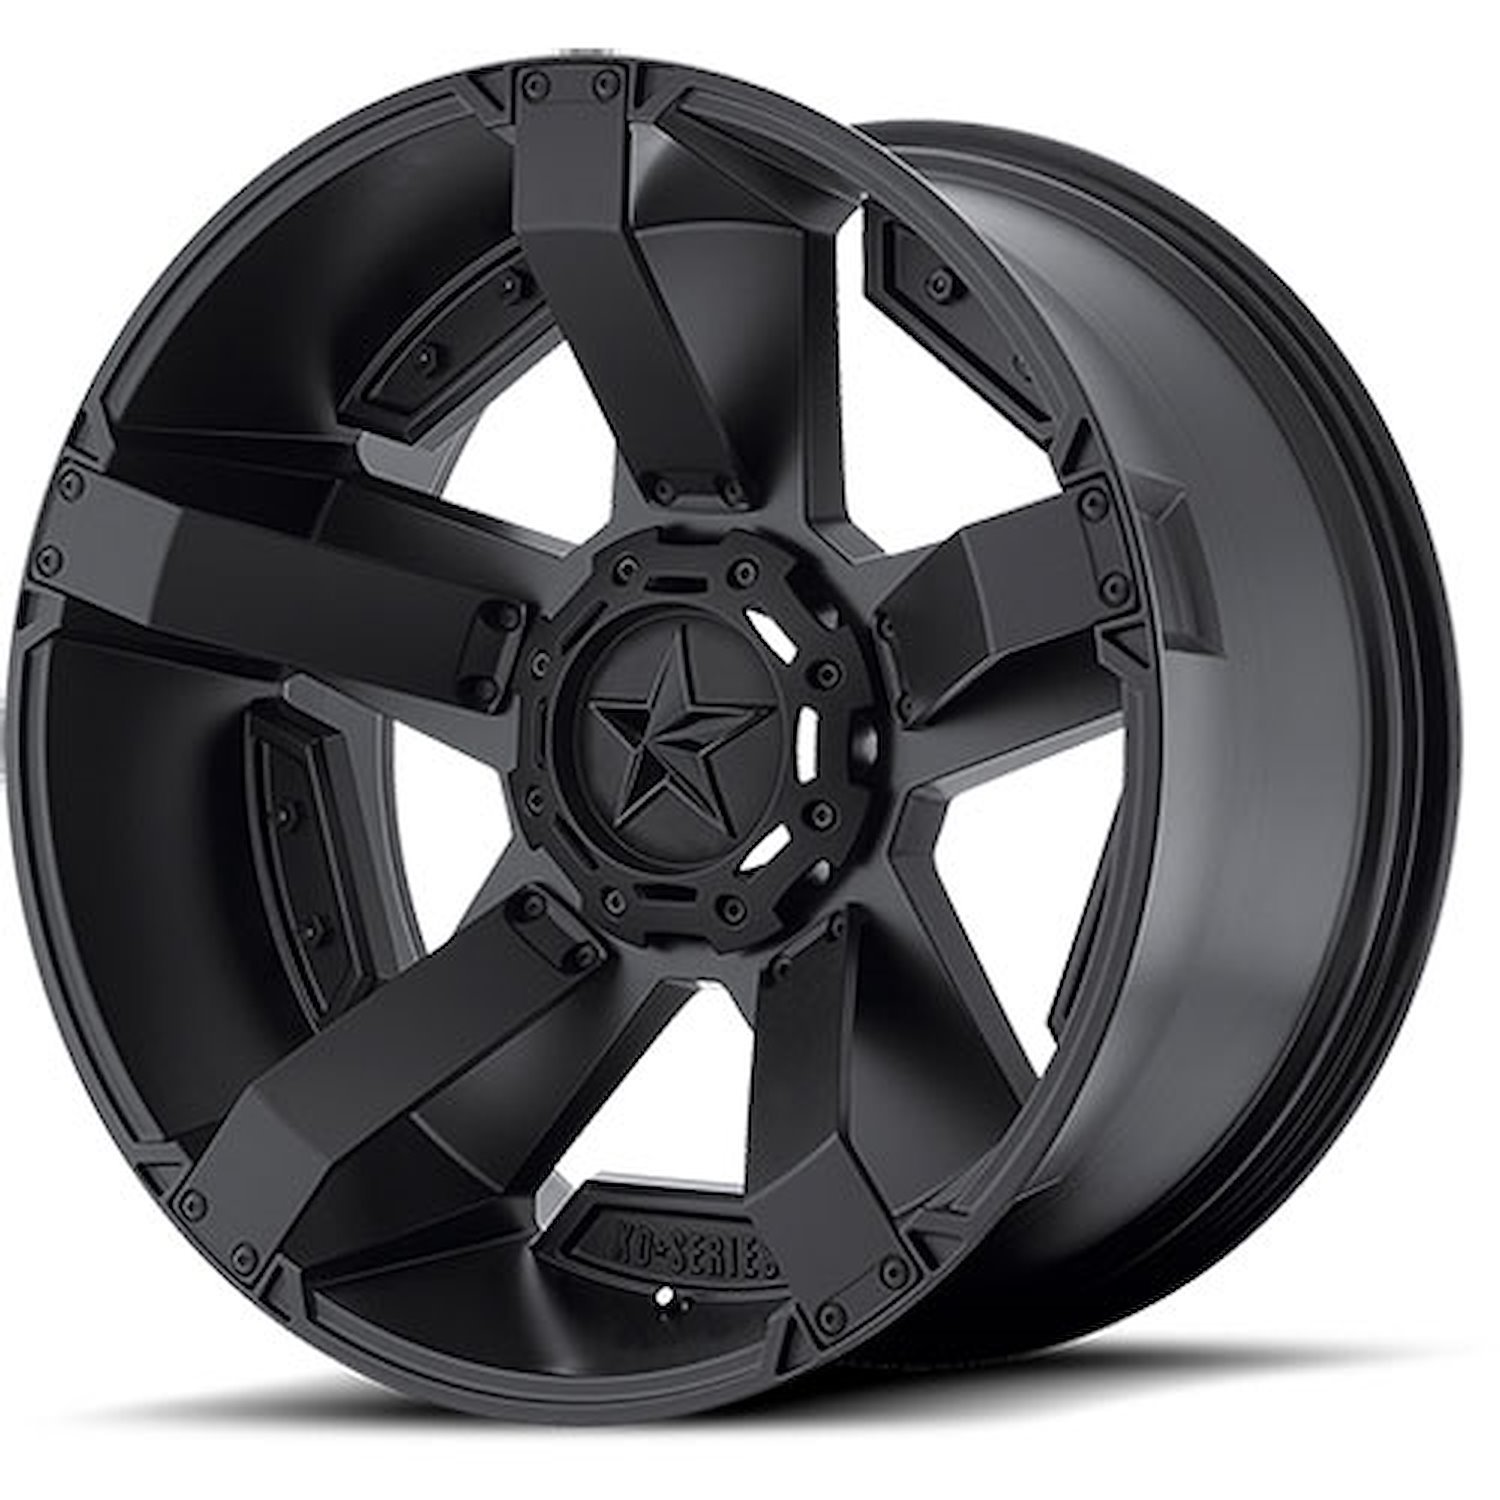 XD811 Series RS2 Rockstar Wheel Size: 20" x 10"